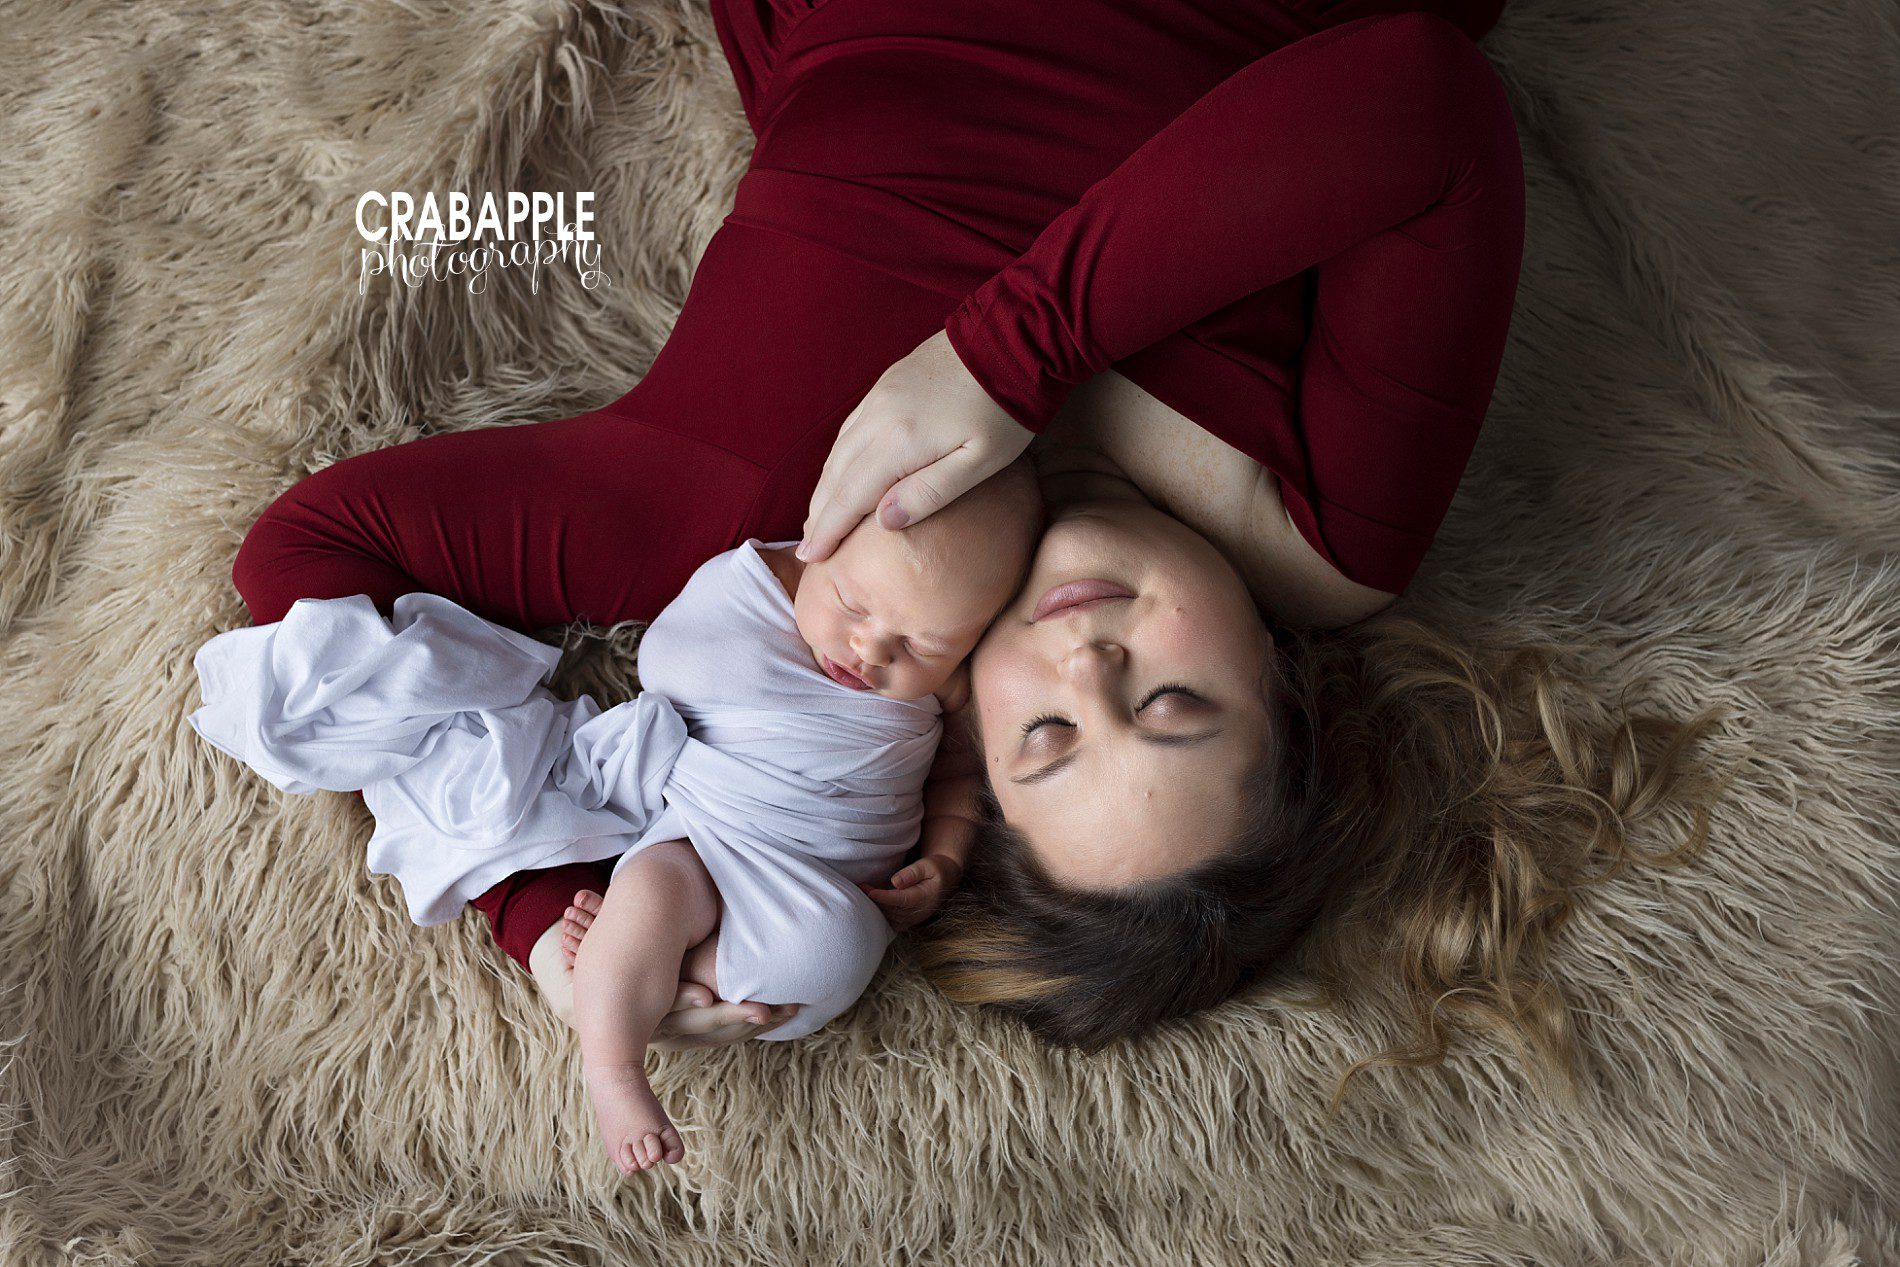 pose ideas for mom and newborn